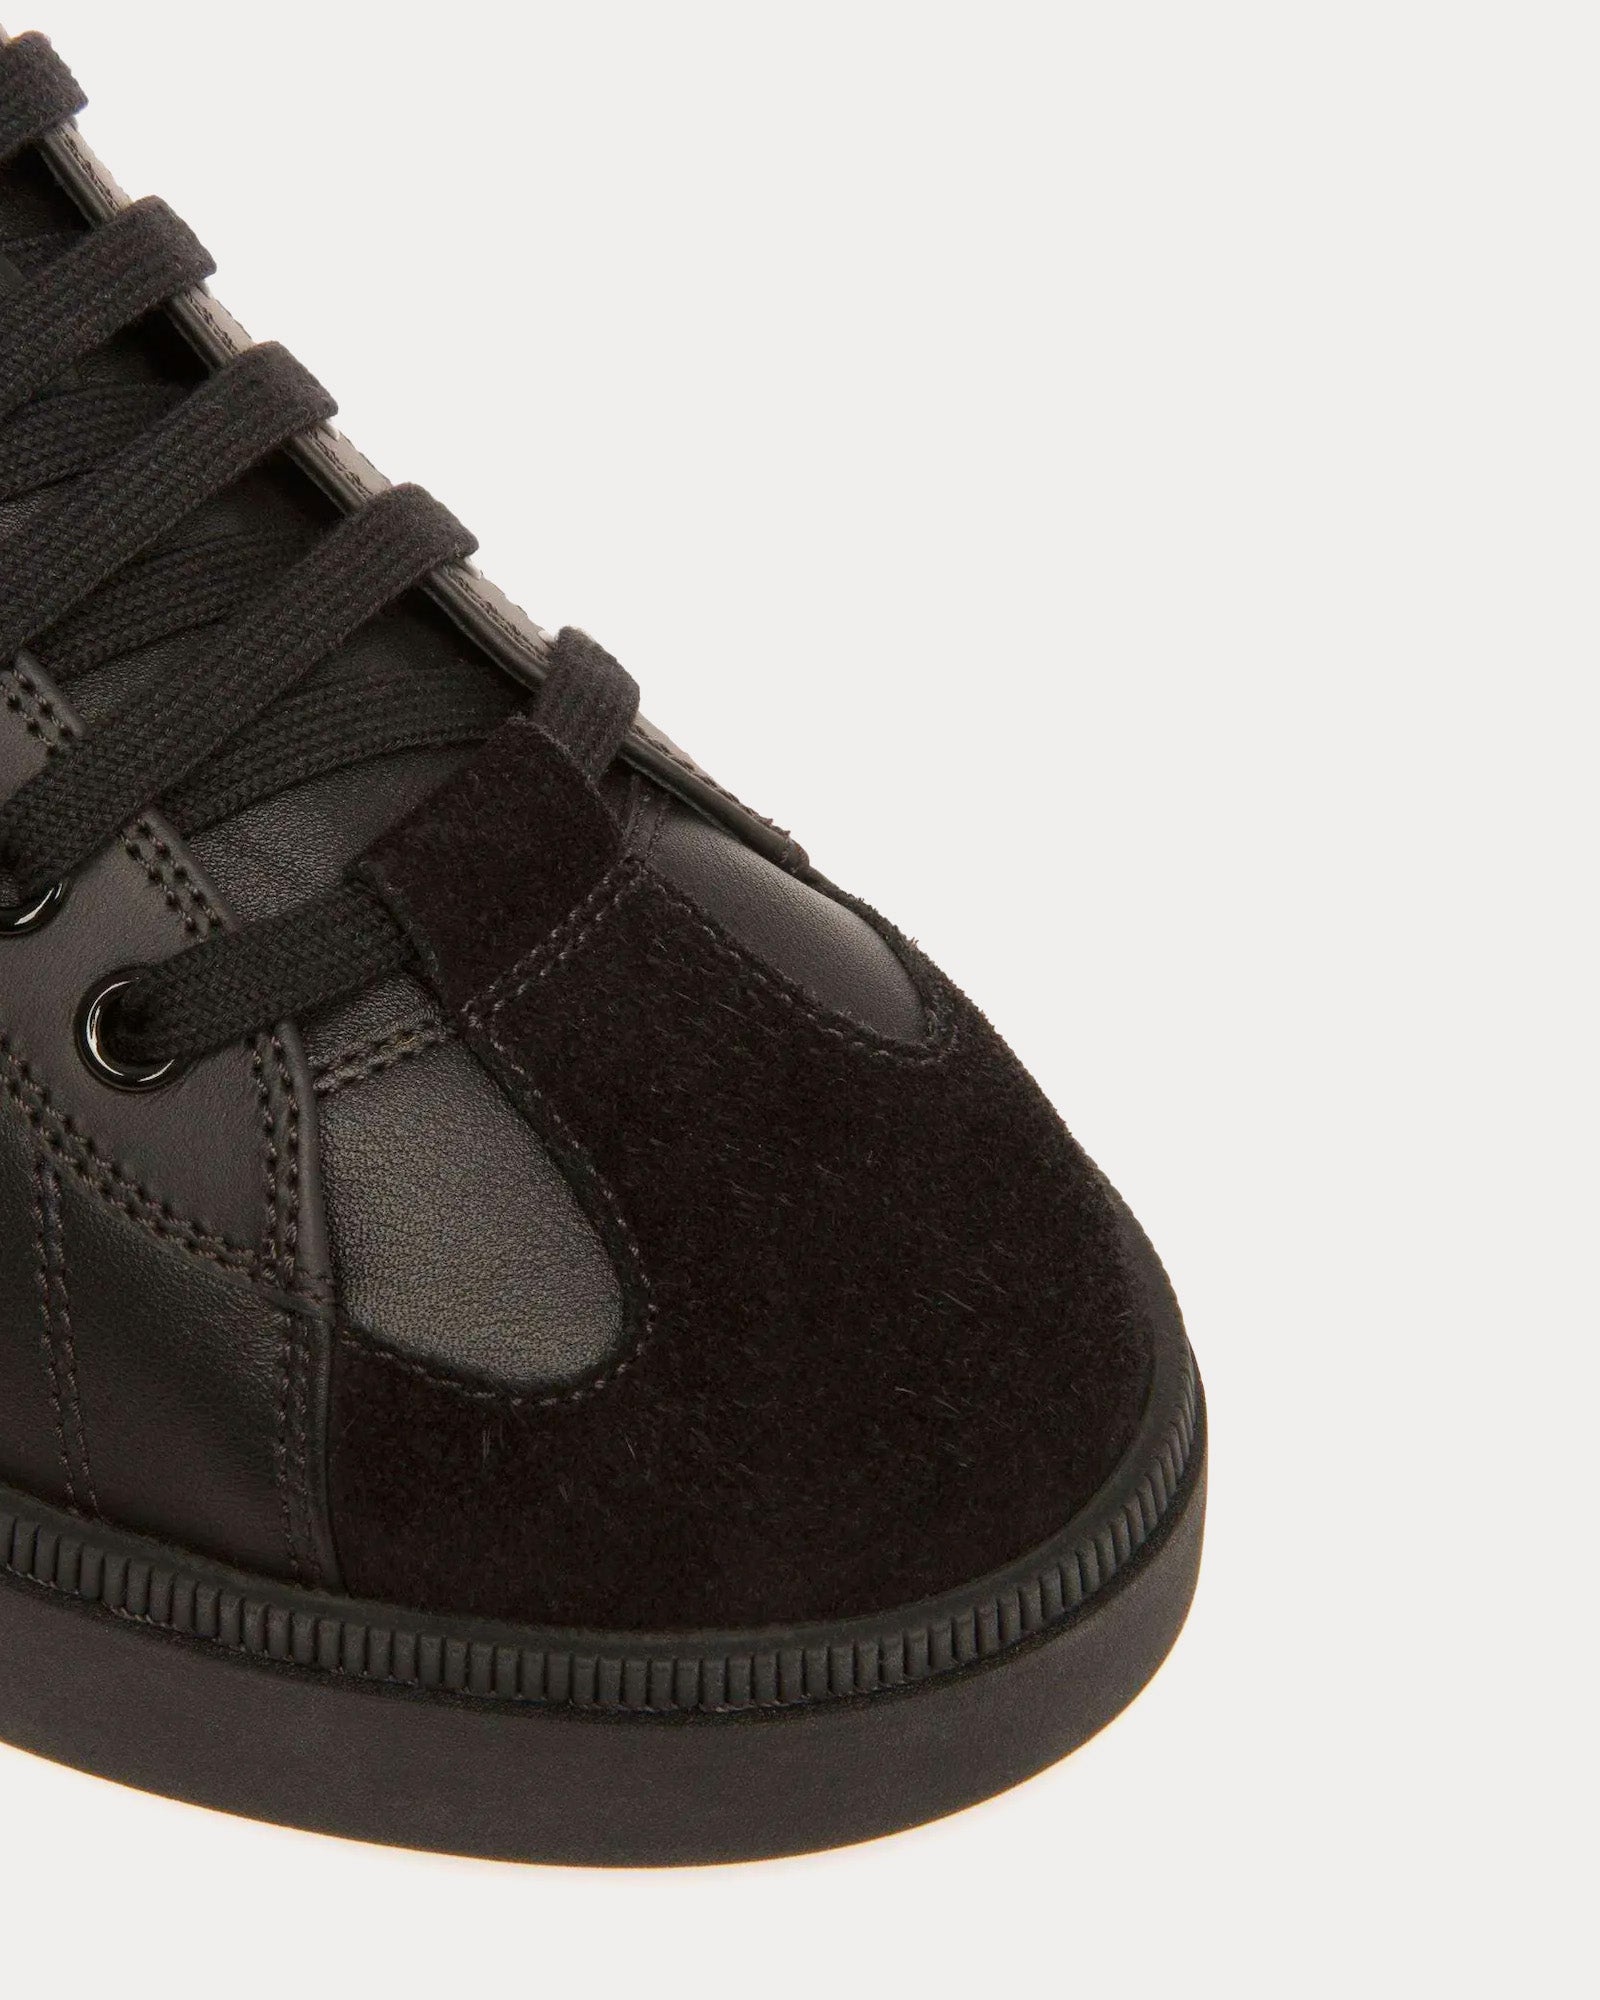 Bally - Raise Leather Python Print Black High Top Sneakers